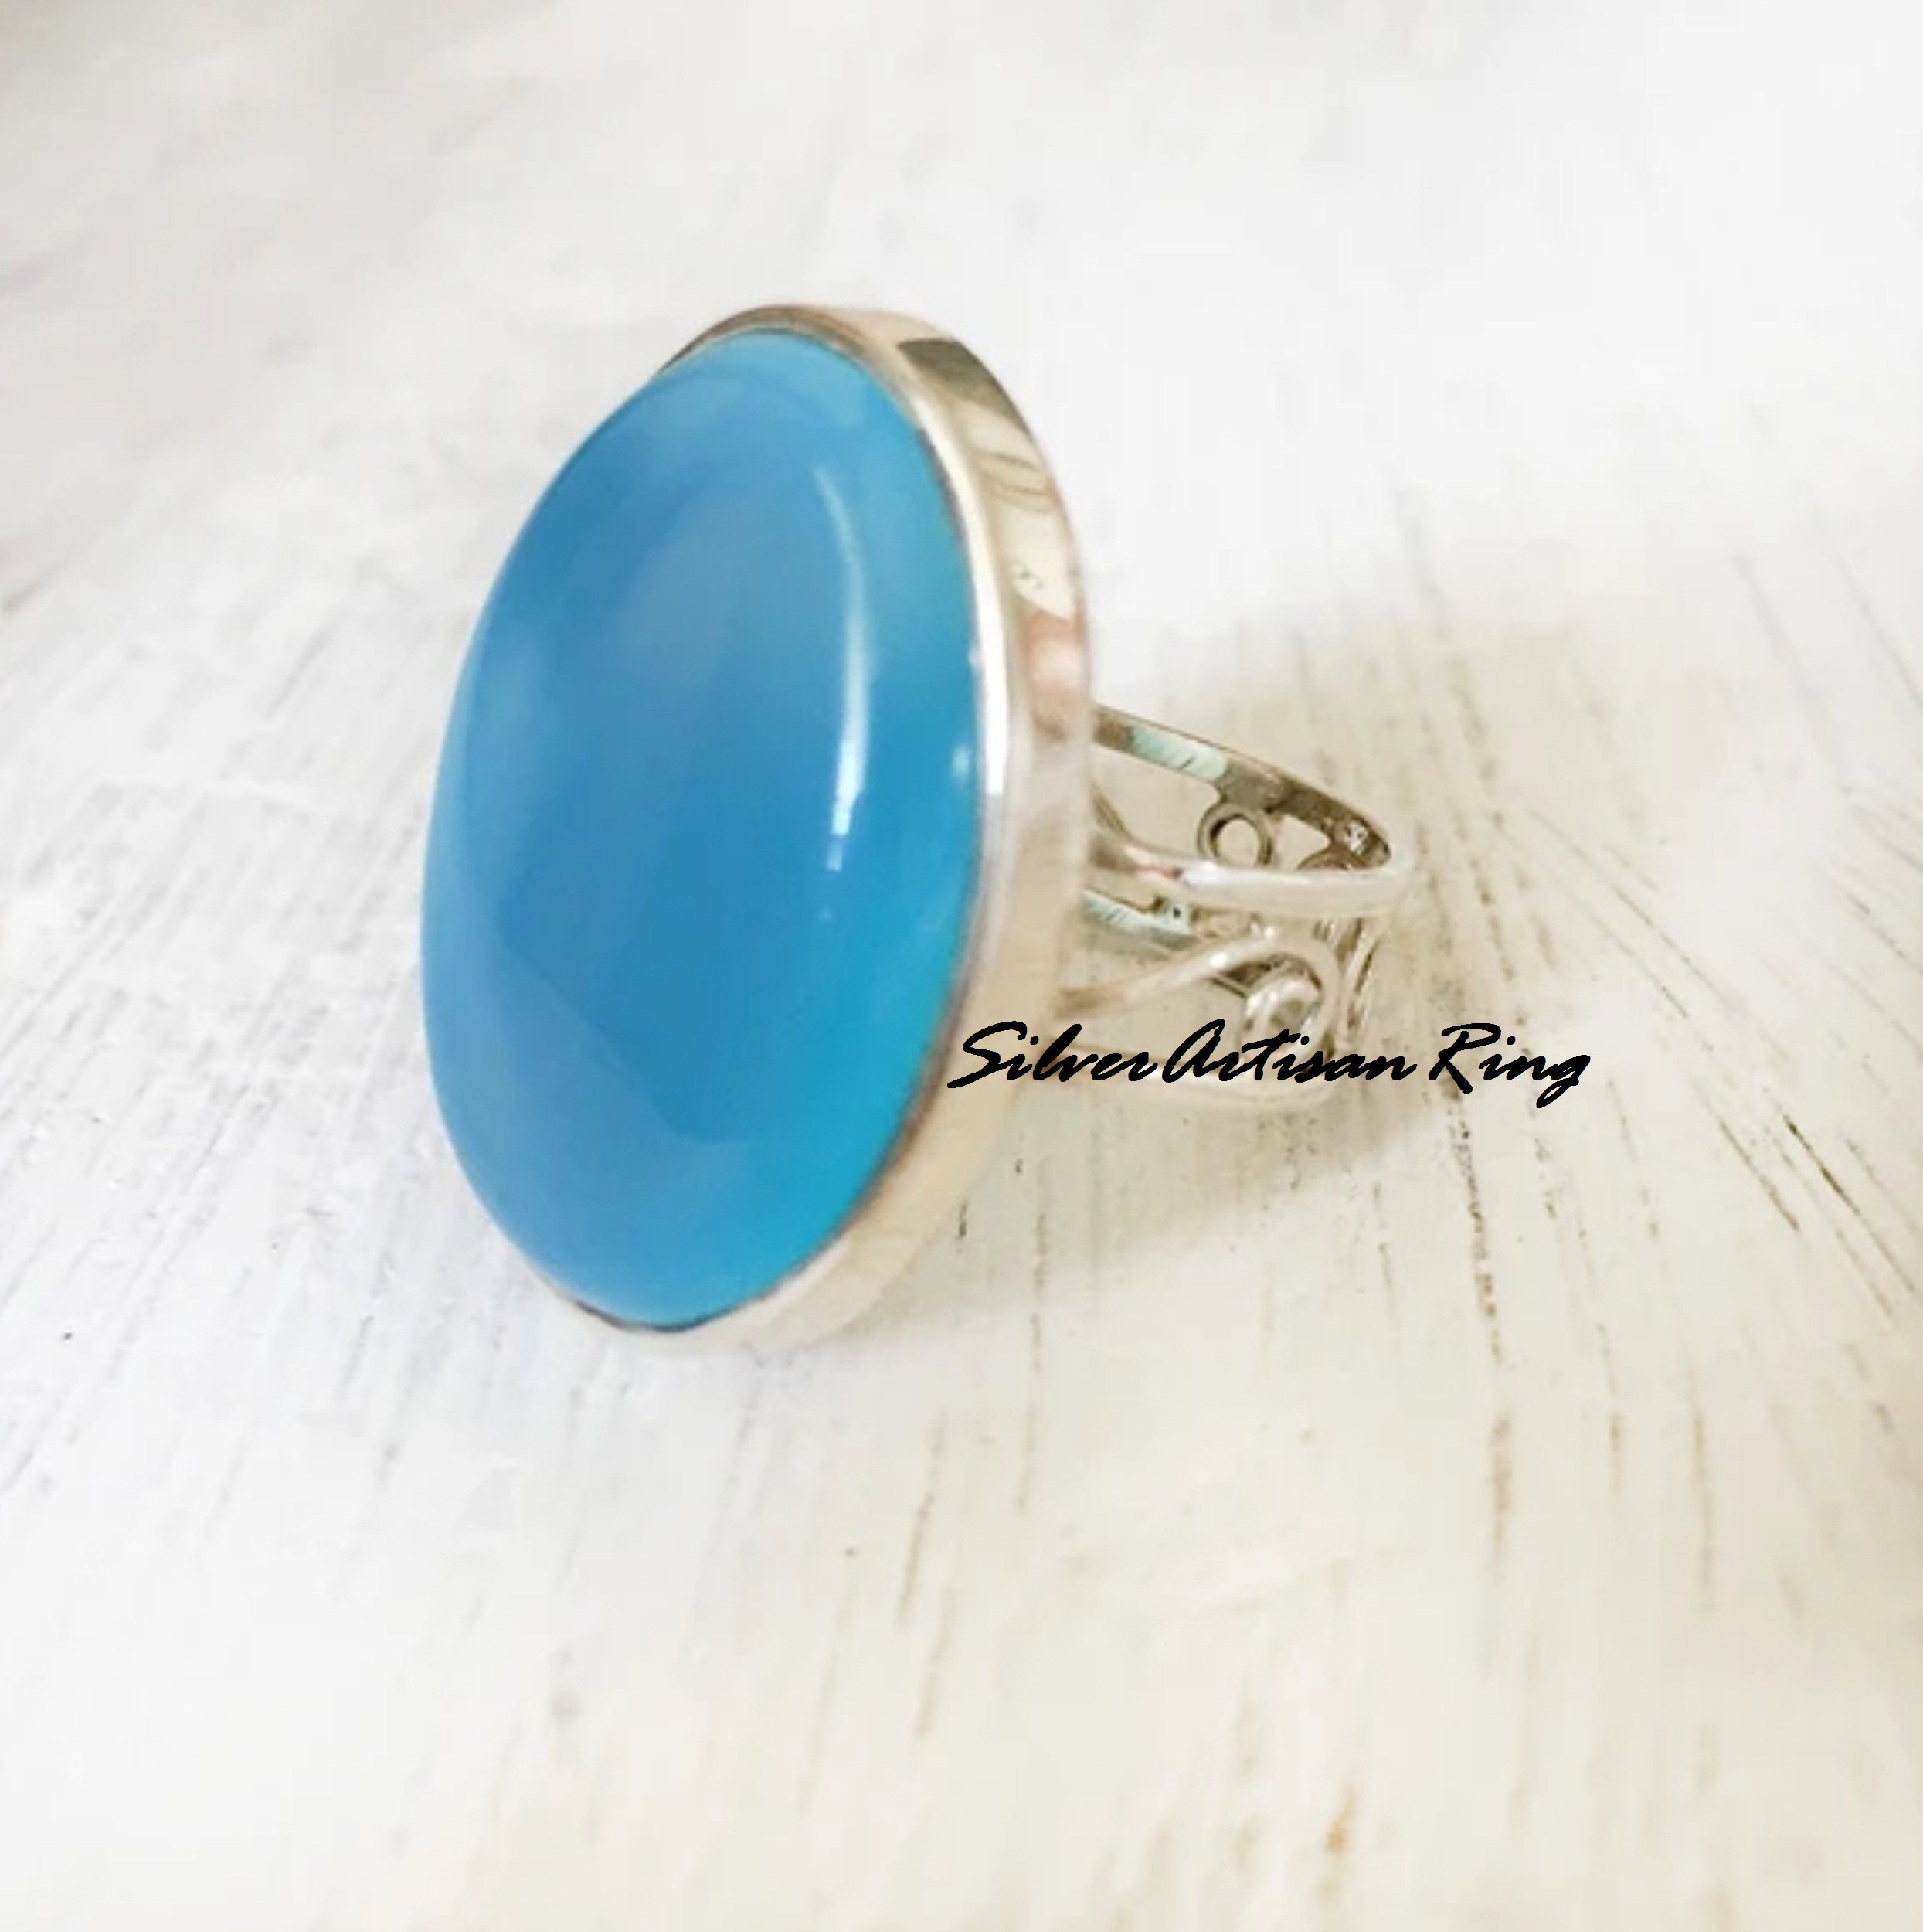 Gift for her Gemstone Ring Women Ring,Beautiful Ring 925 Silver Ring Oval Shape Ring Blue Chalcedony Ring Designer Ring Handmade Ring